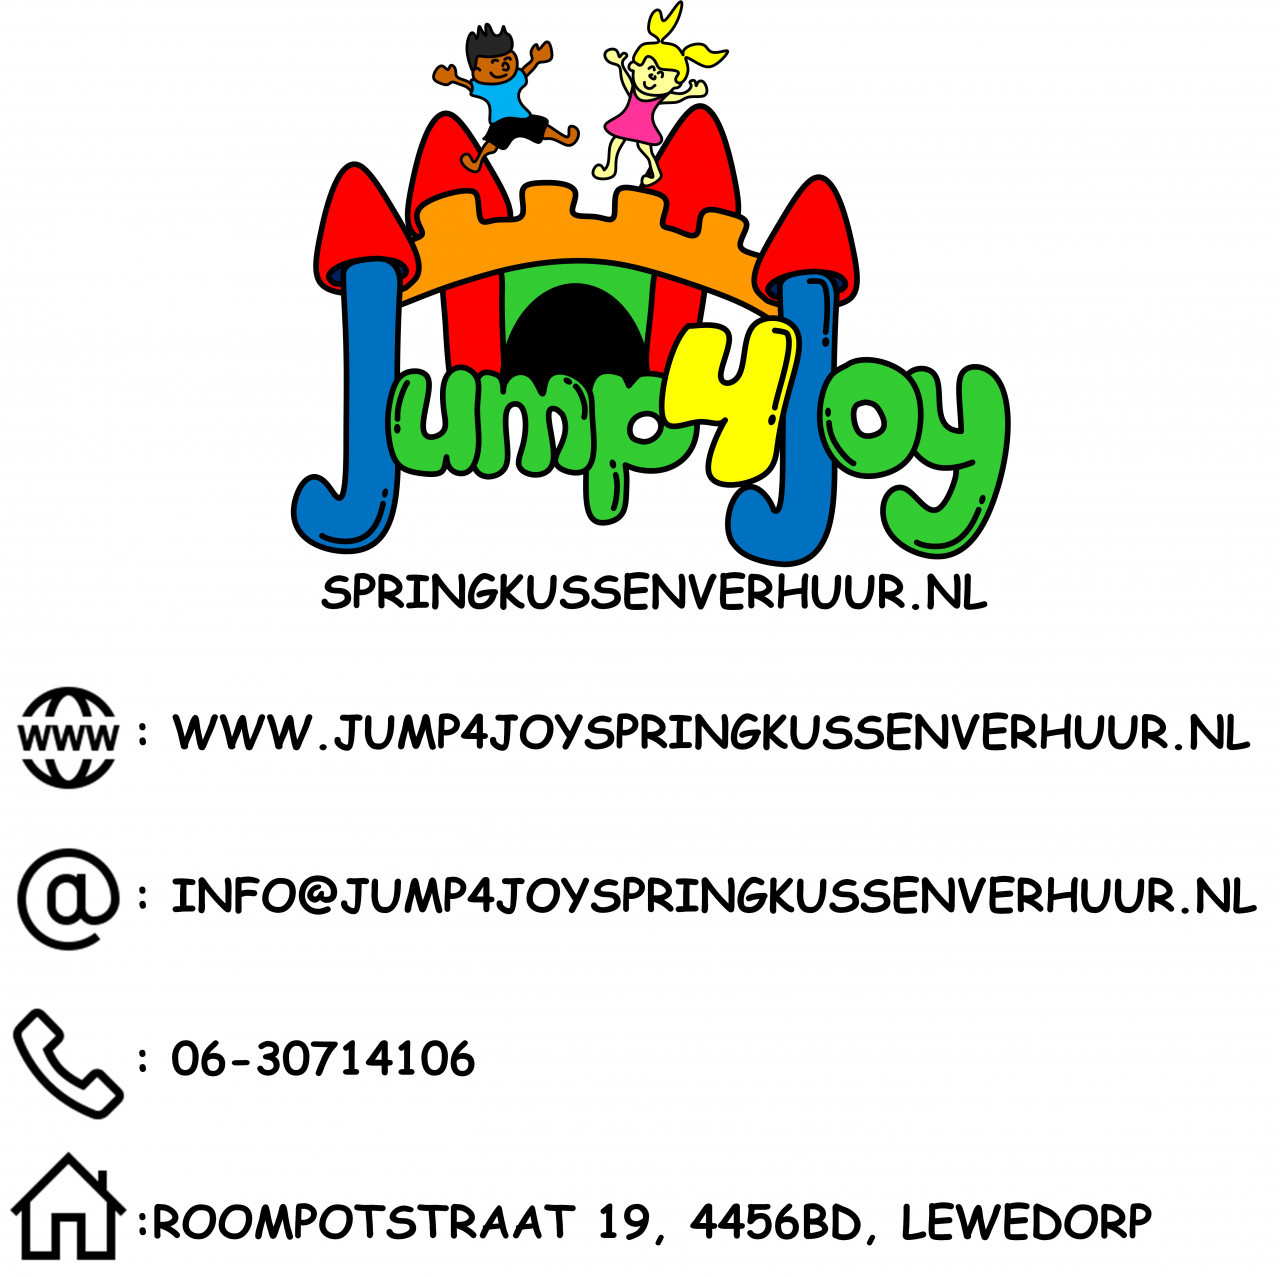 Springkussen Nijlpaard: www.jump4joyspringkussenverhuur.nl